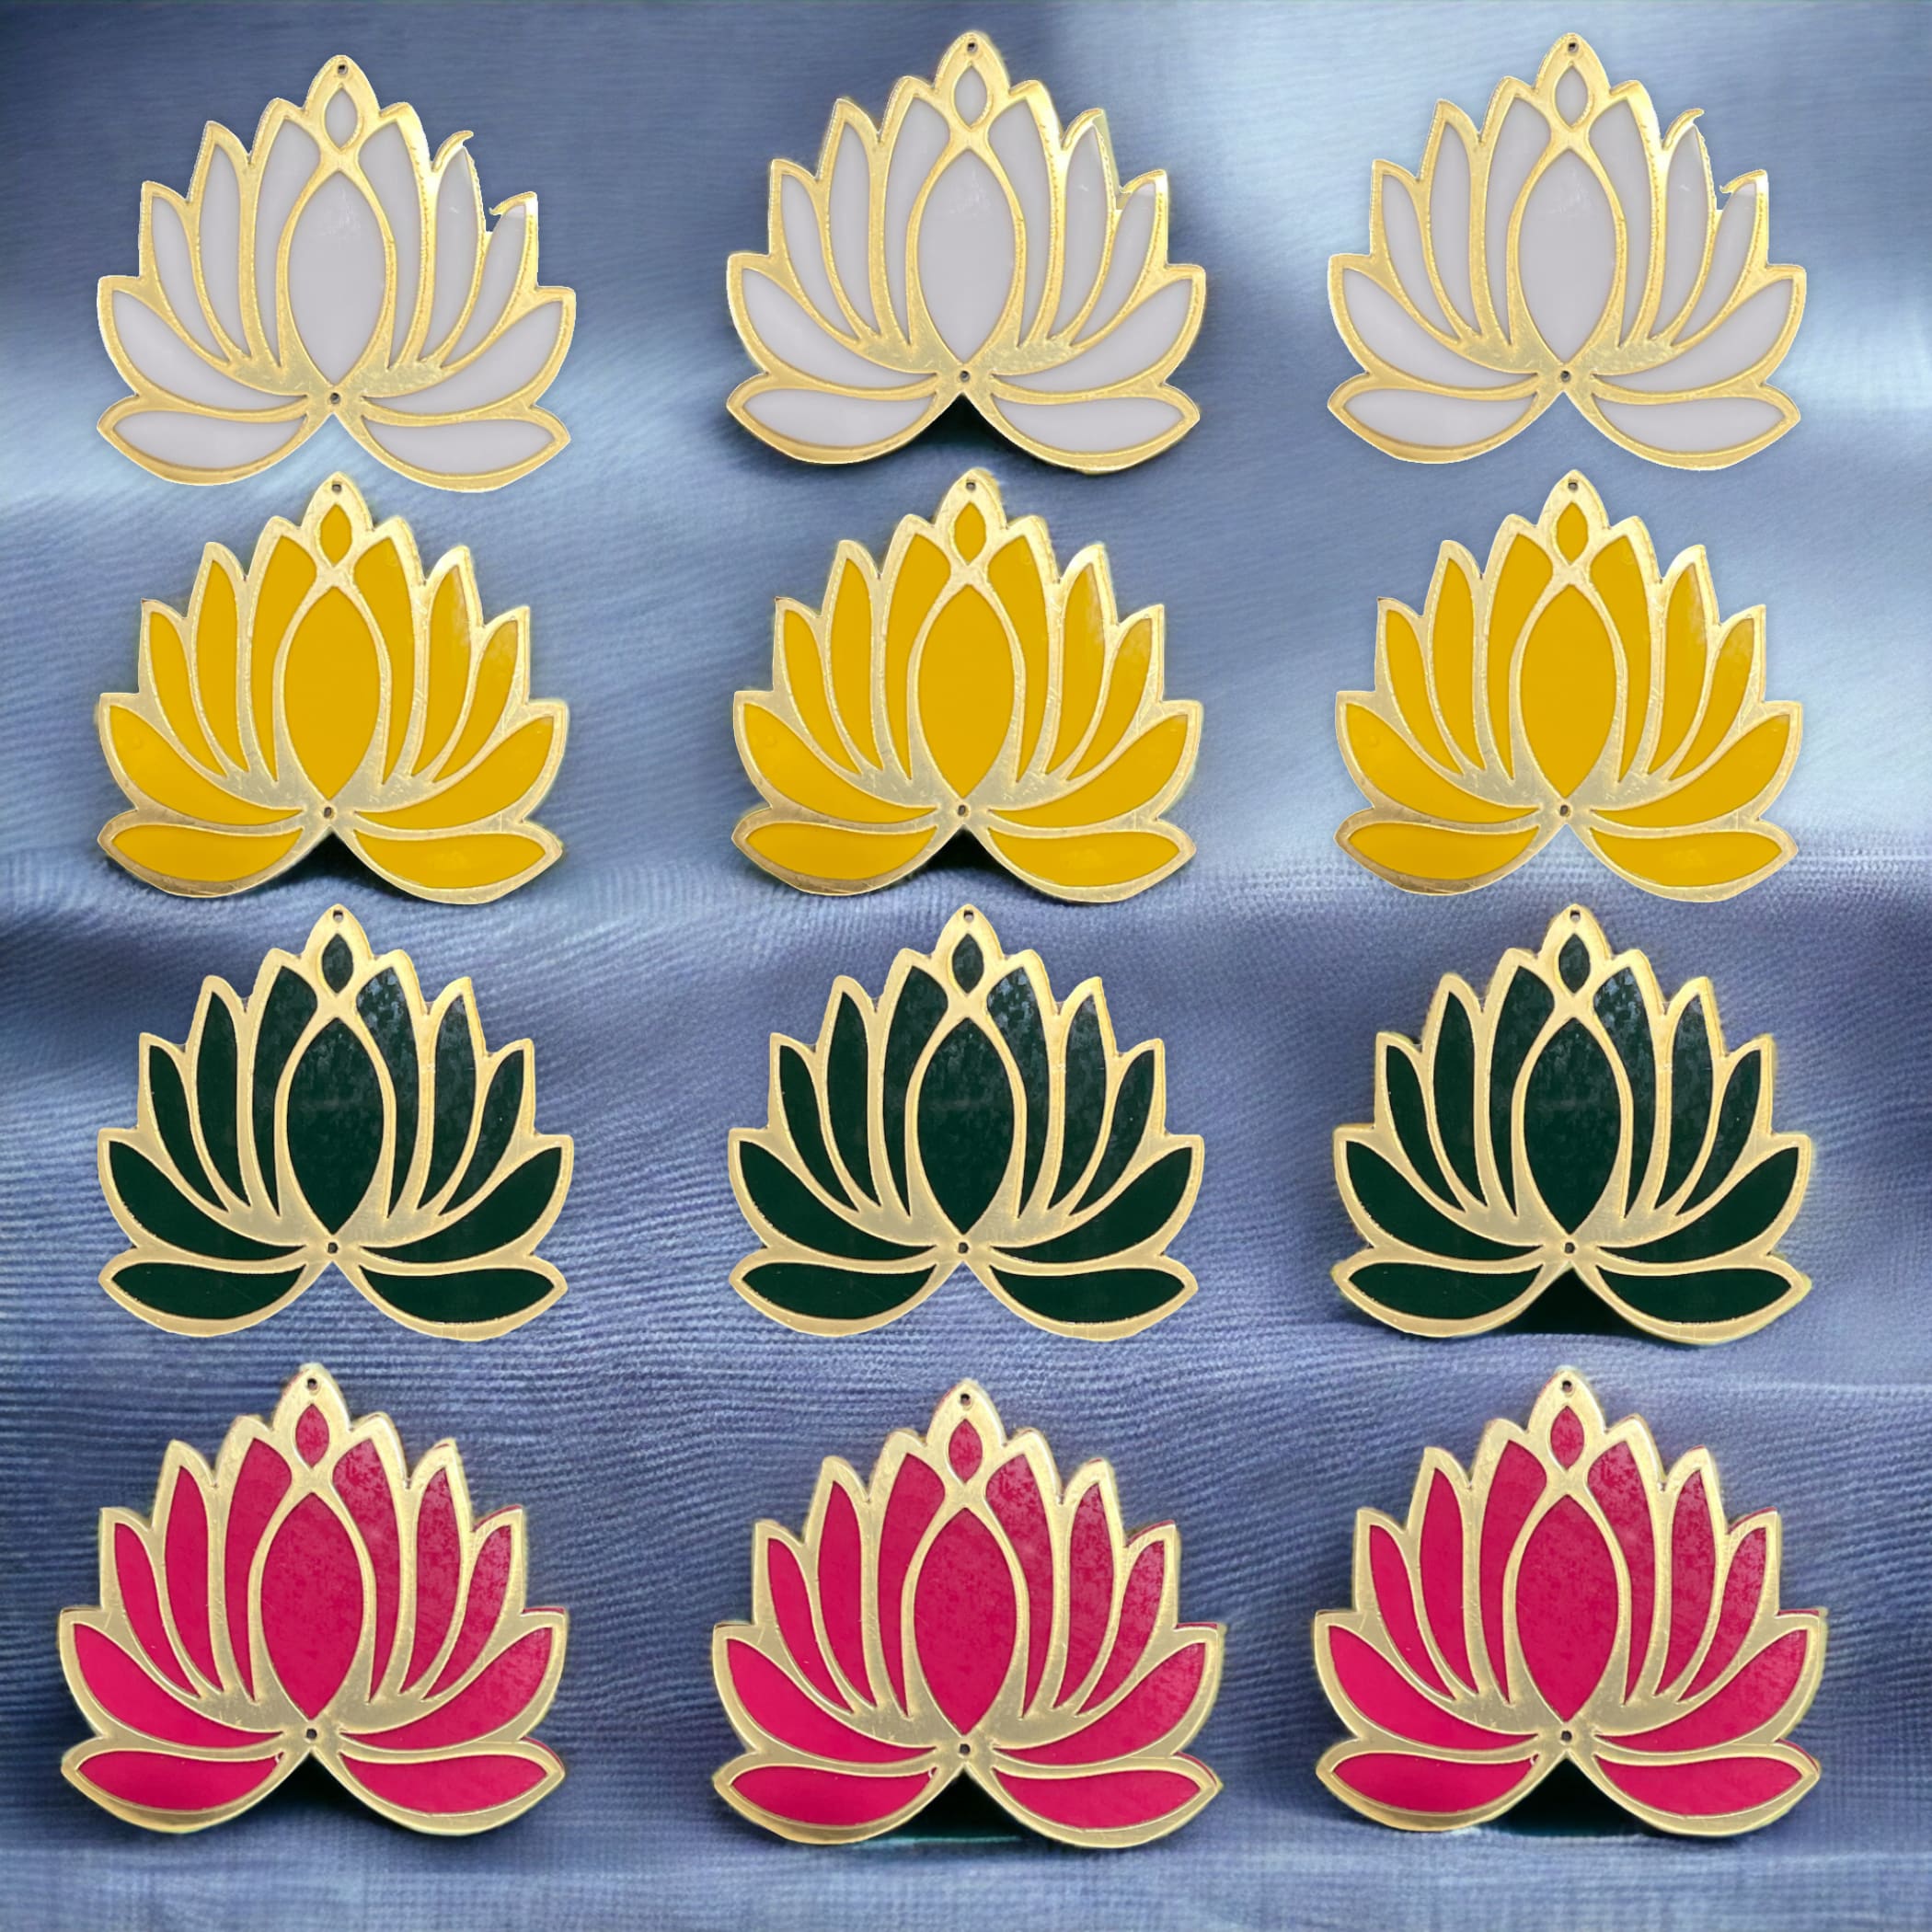 Lotus flower cutout diy rangoli decoration for diwali pooja